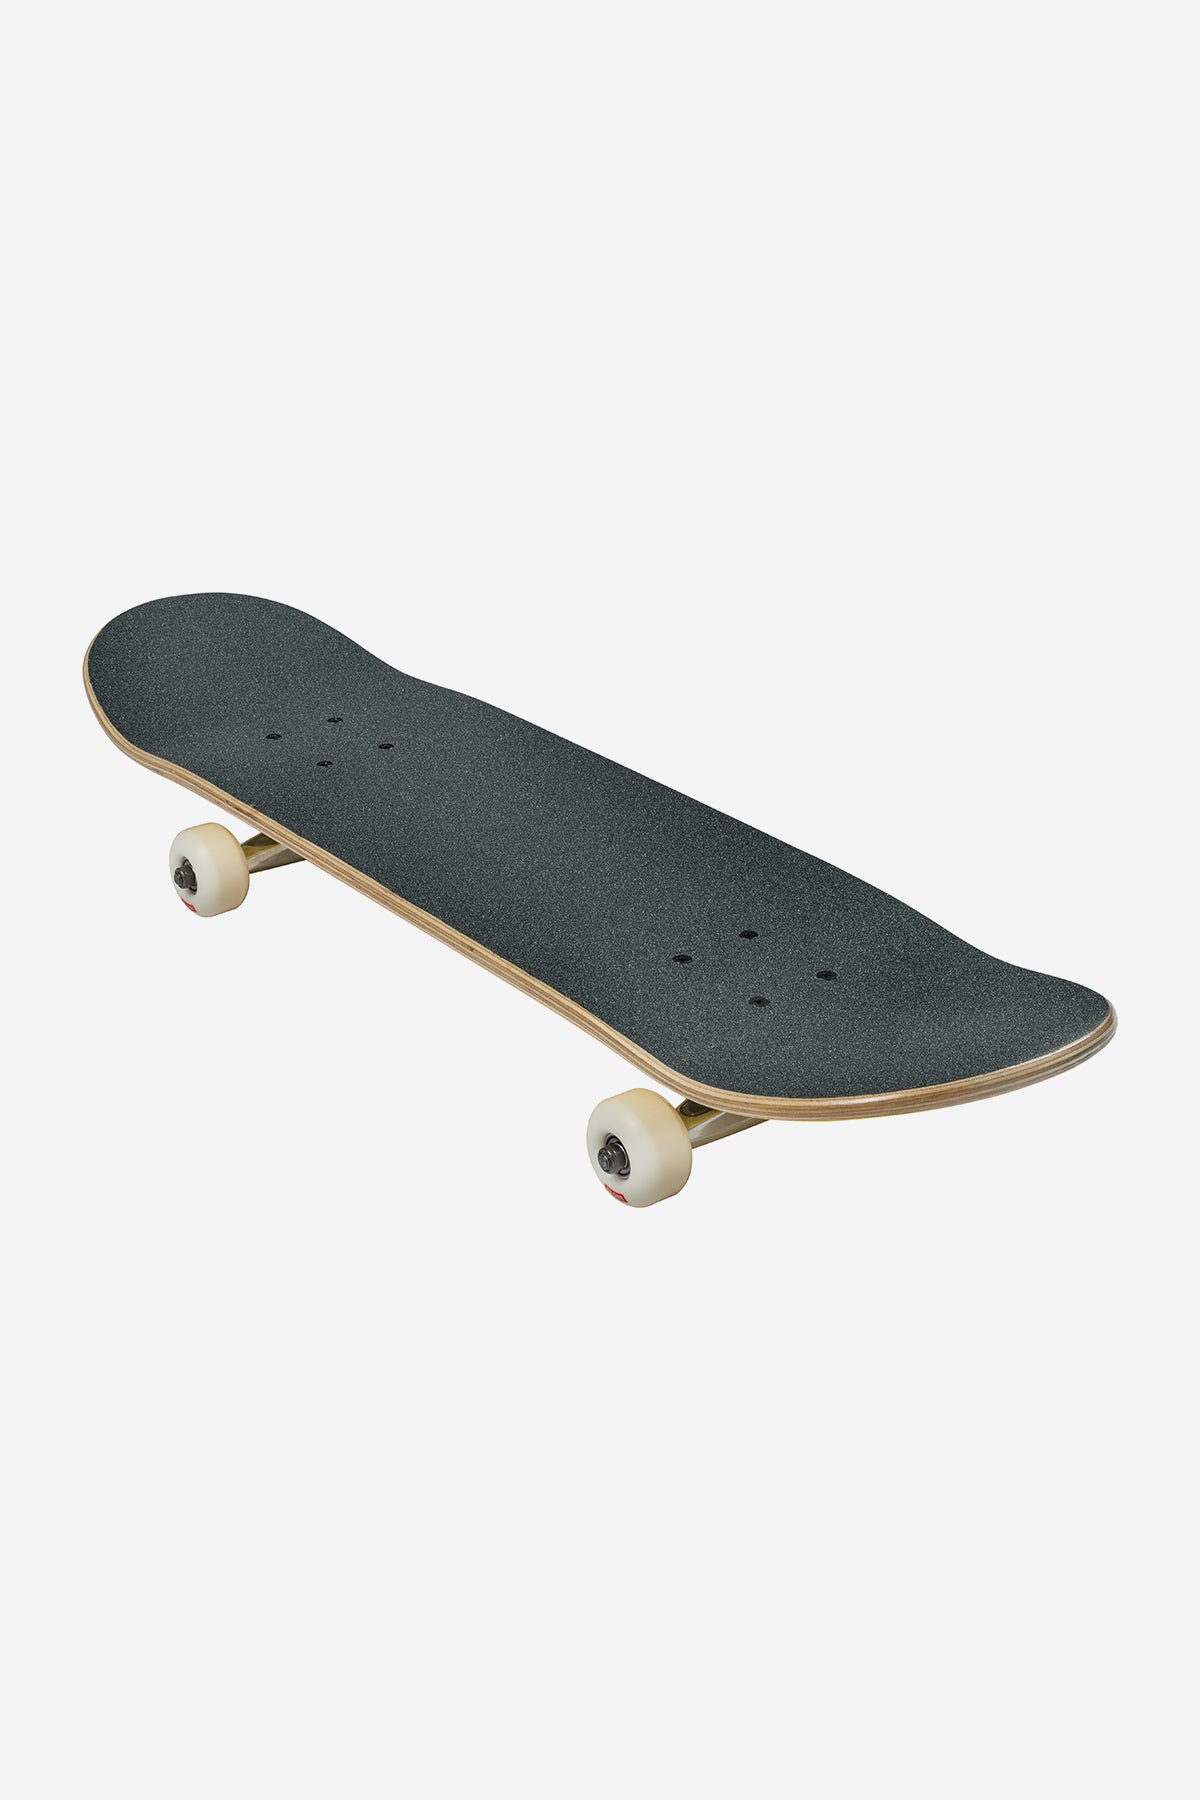 goodstock sahara- 8.375" complete skateboard